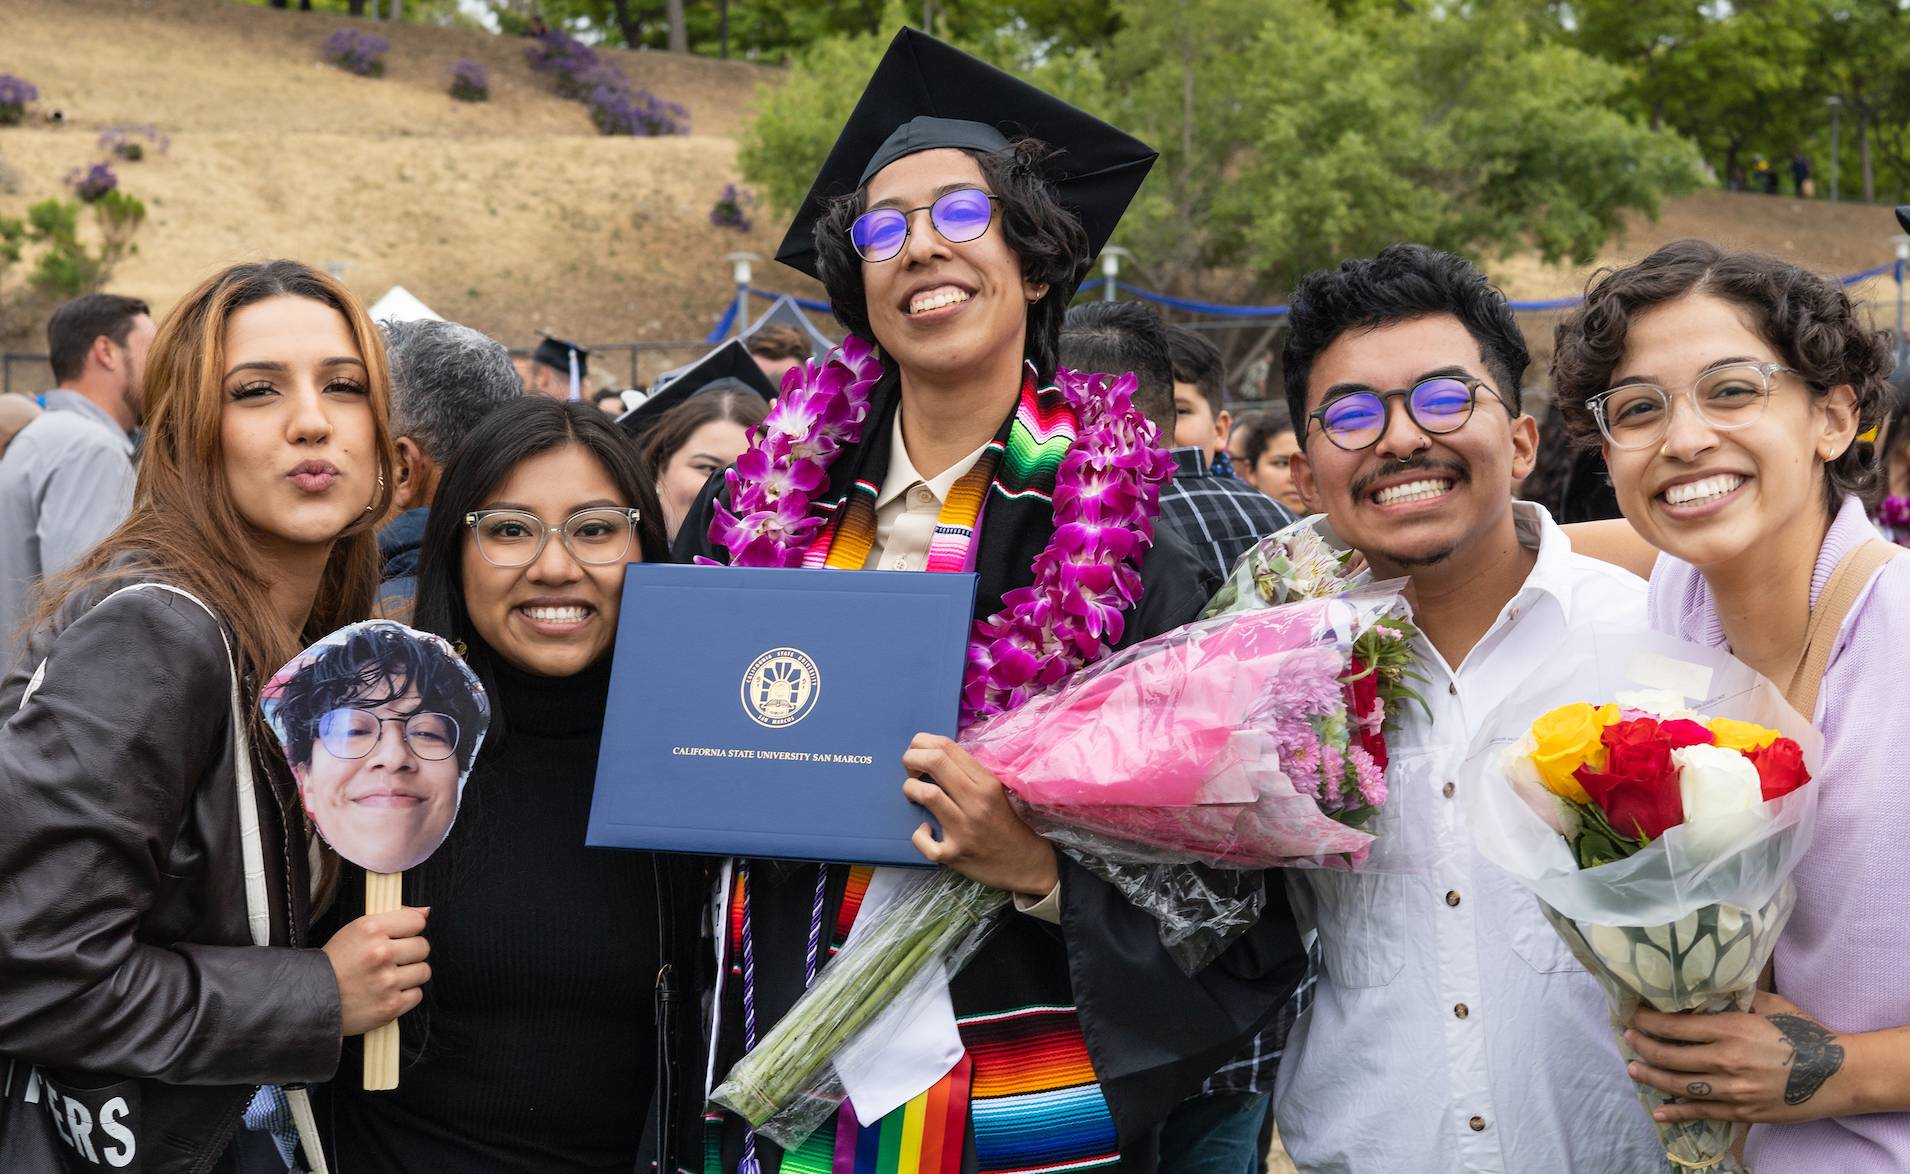 Family lifting their graduate